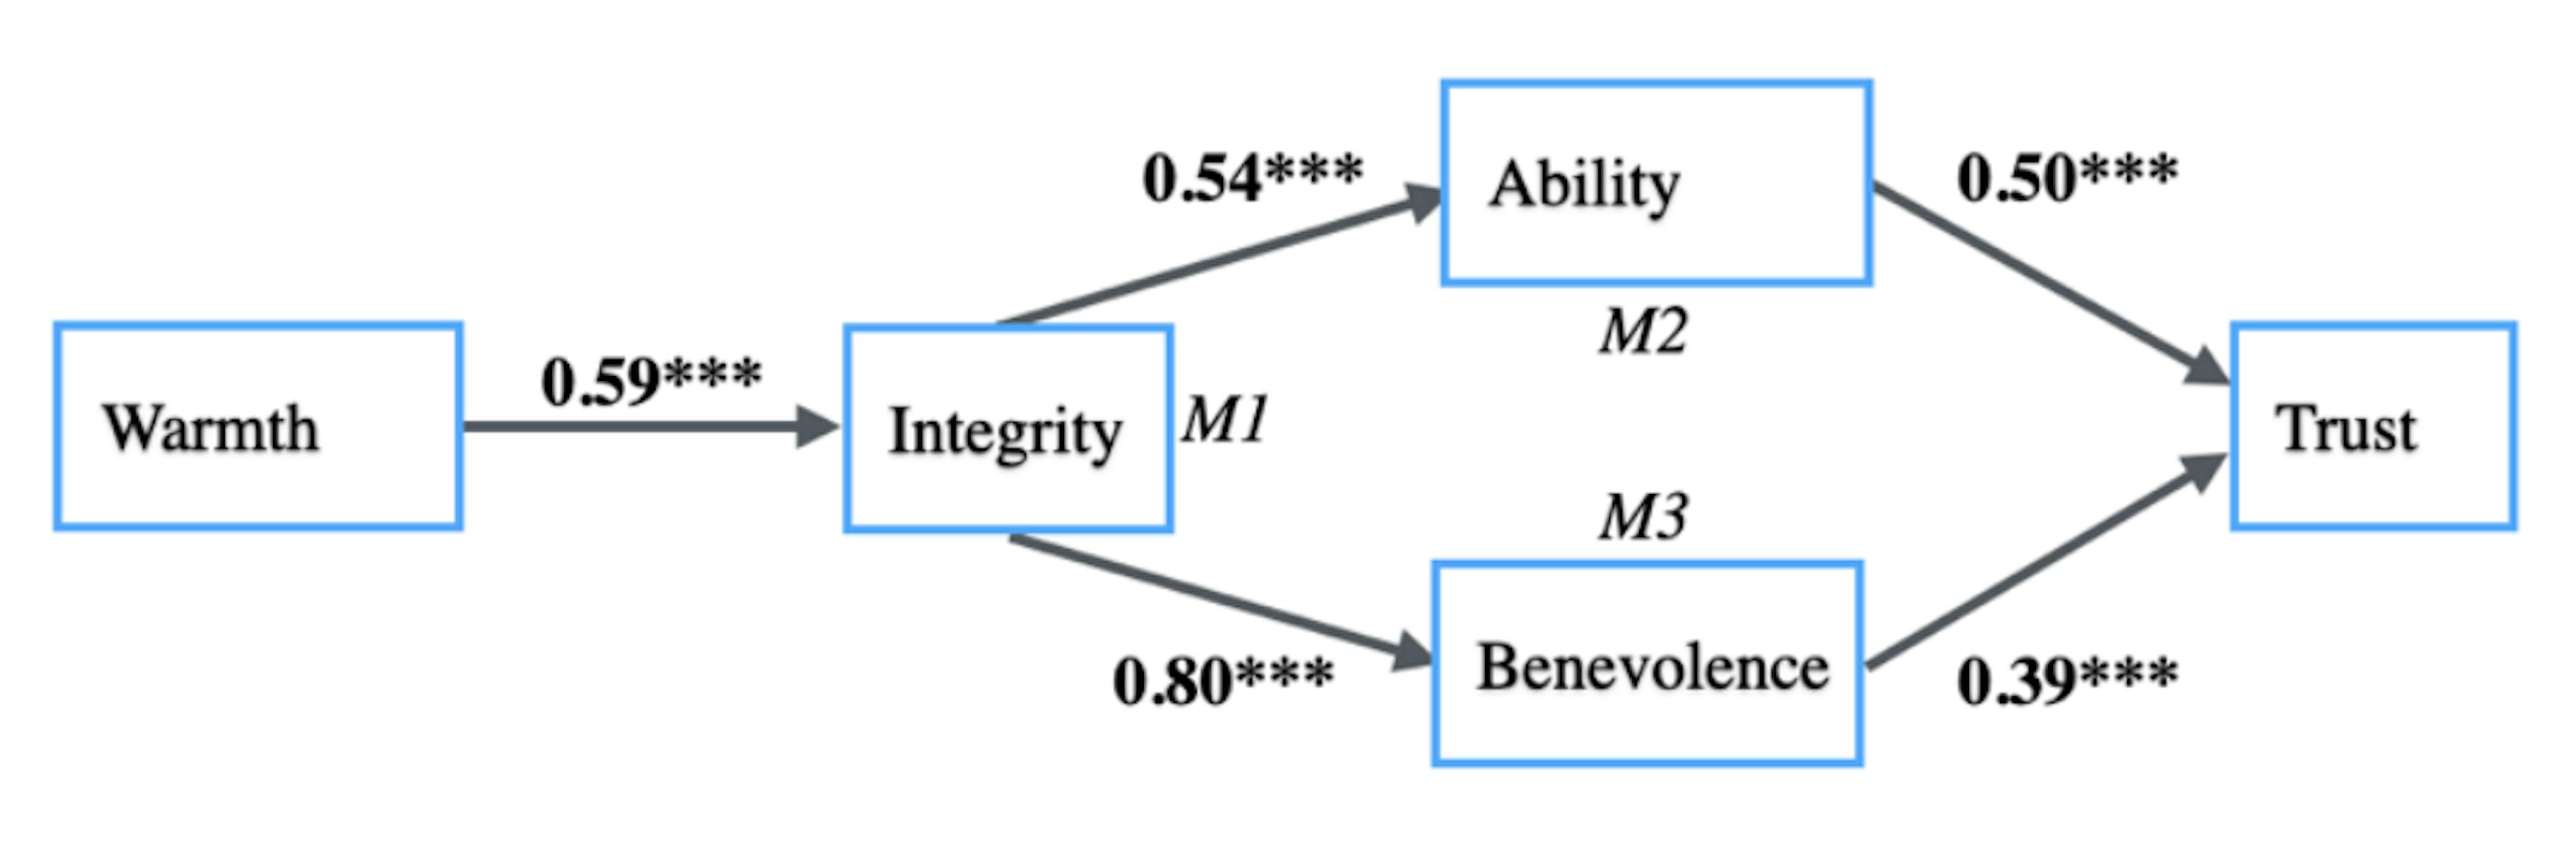 Fig. 4. Serial Mediator Model (Warmth - Integrity - Ability/Benevolence- Trust).